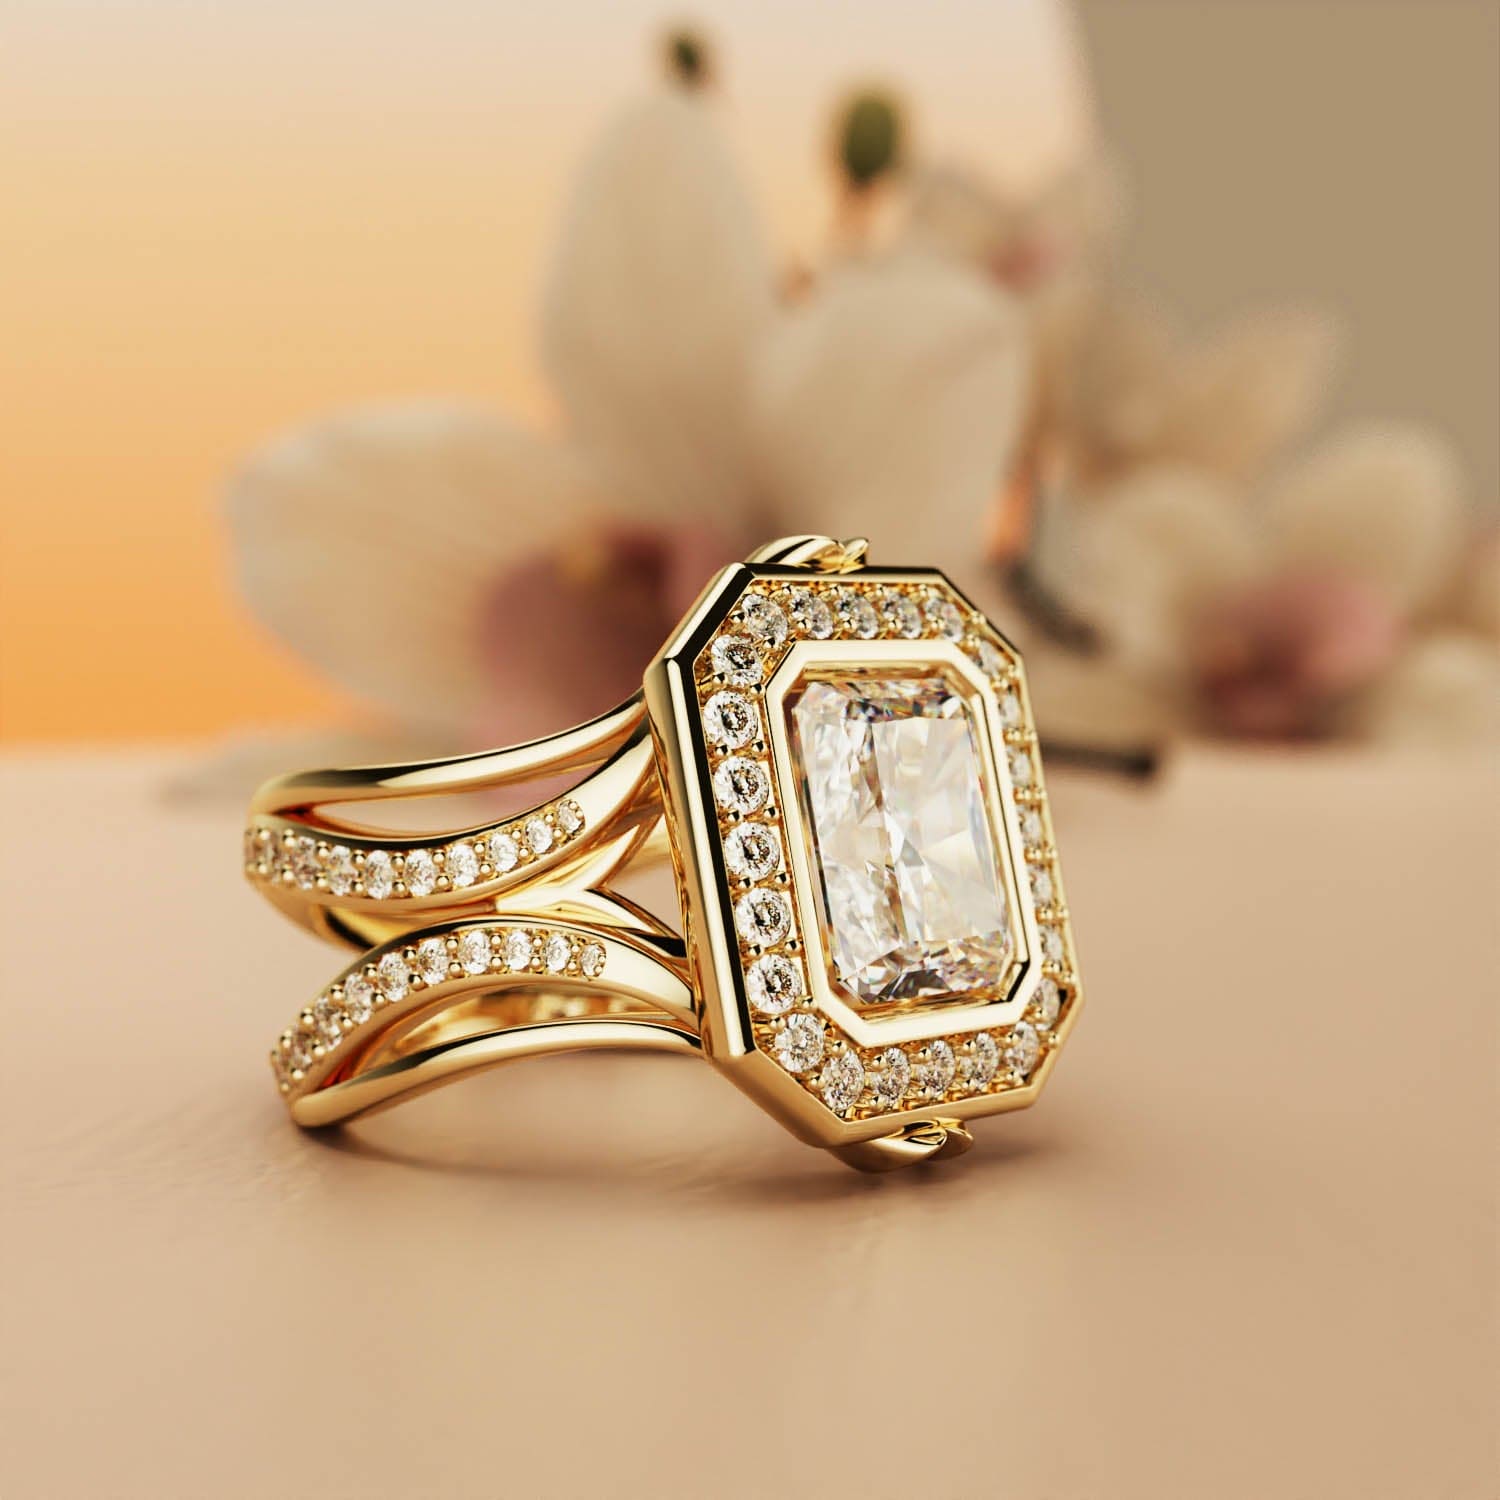 Elysian Glow: Emerald-Cut Diamond Ring - 18K Gold Vermeil